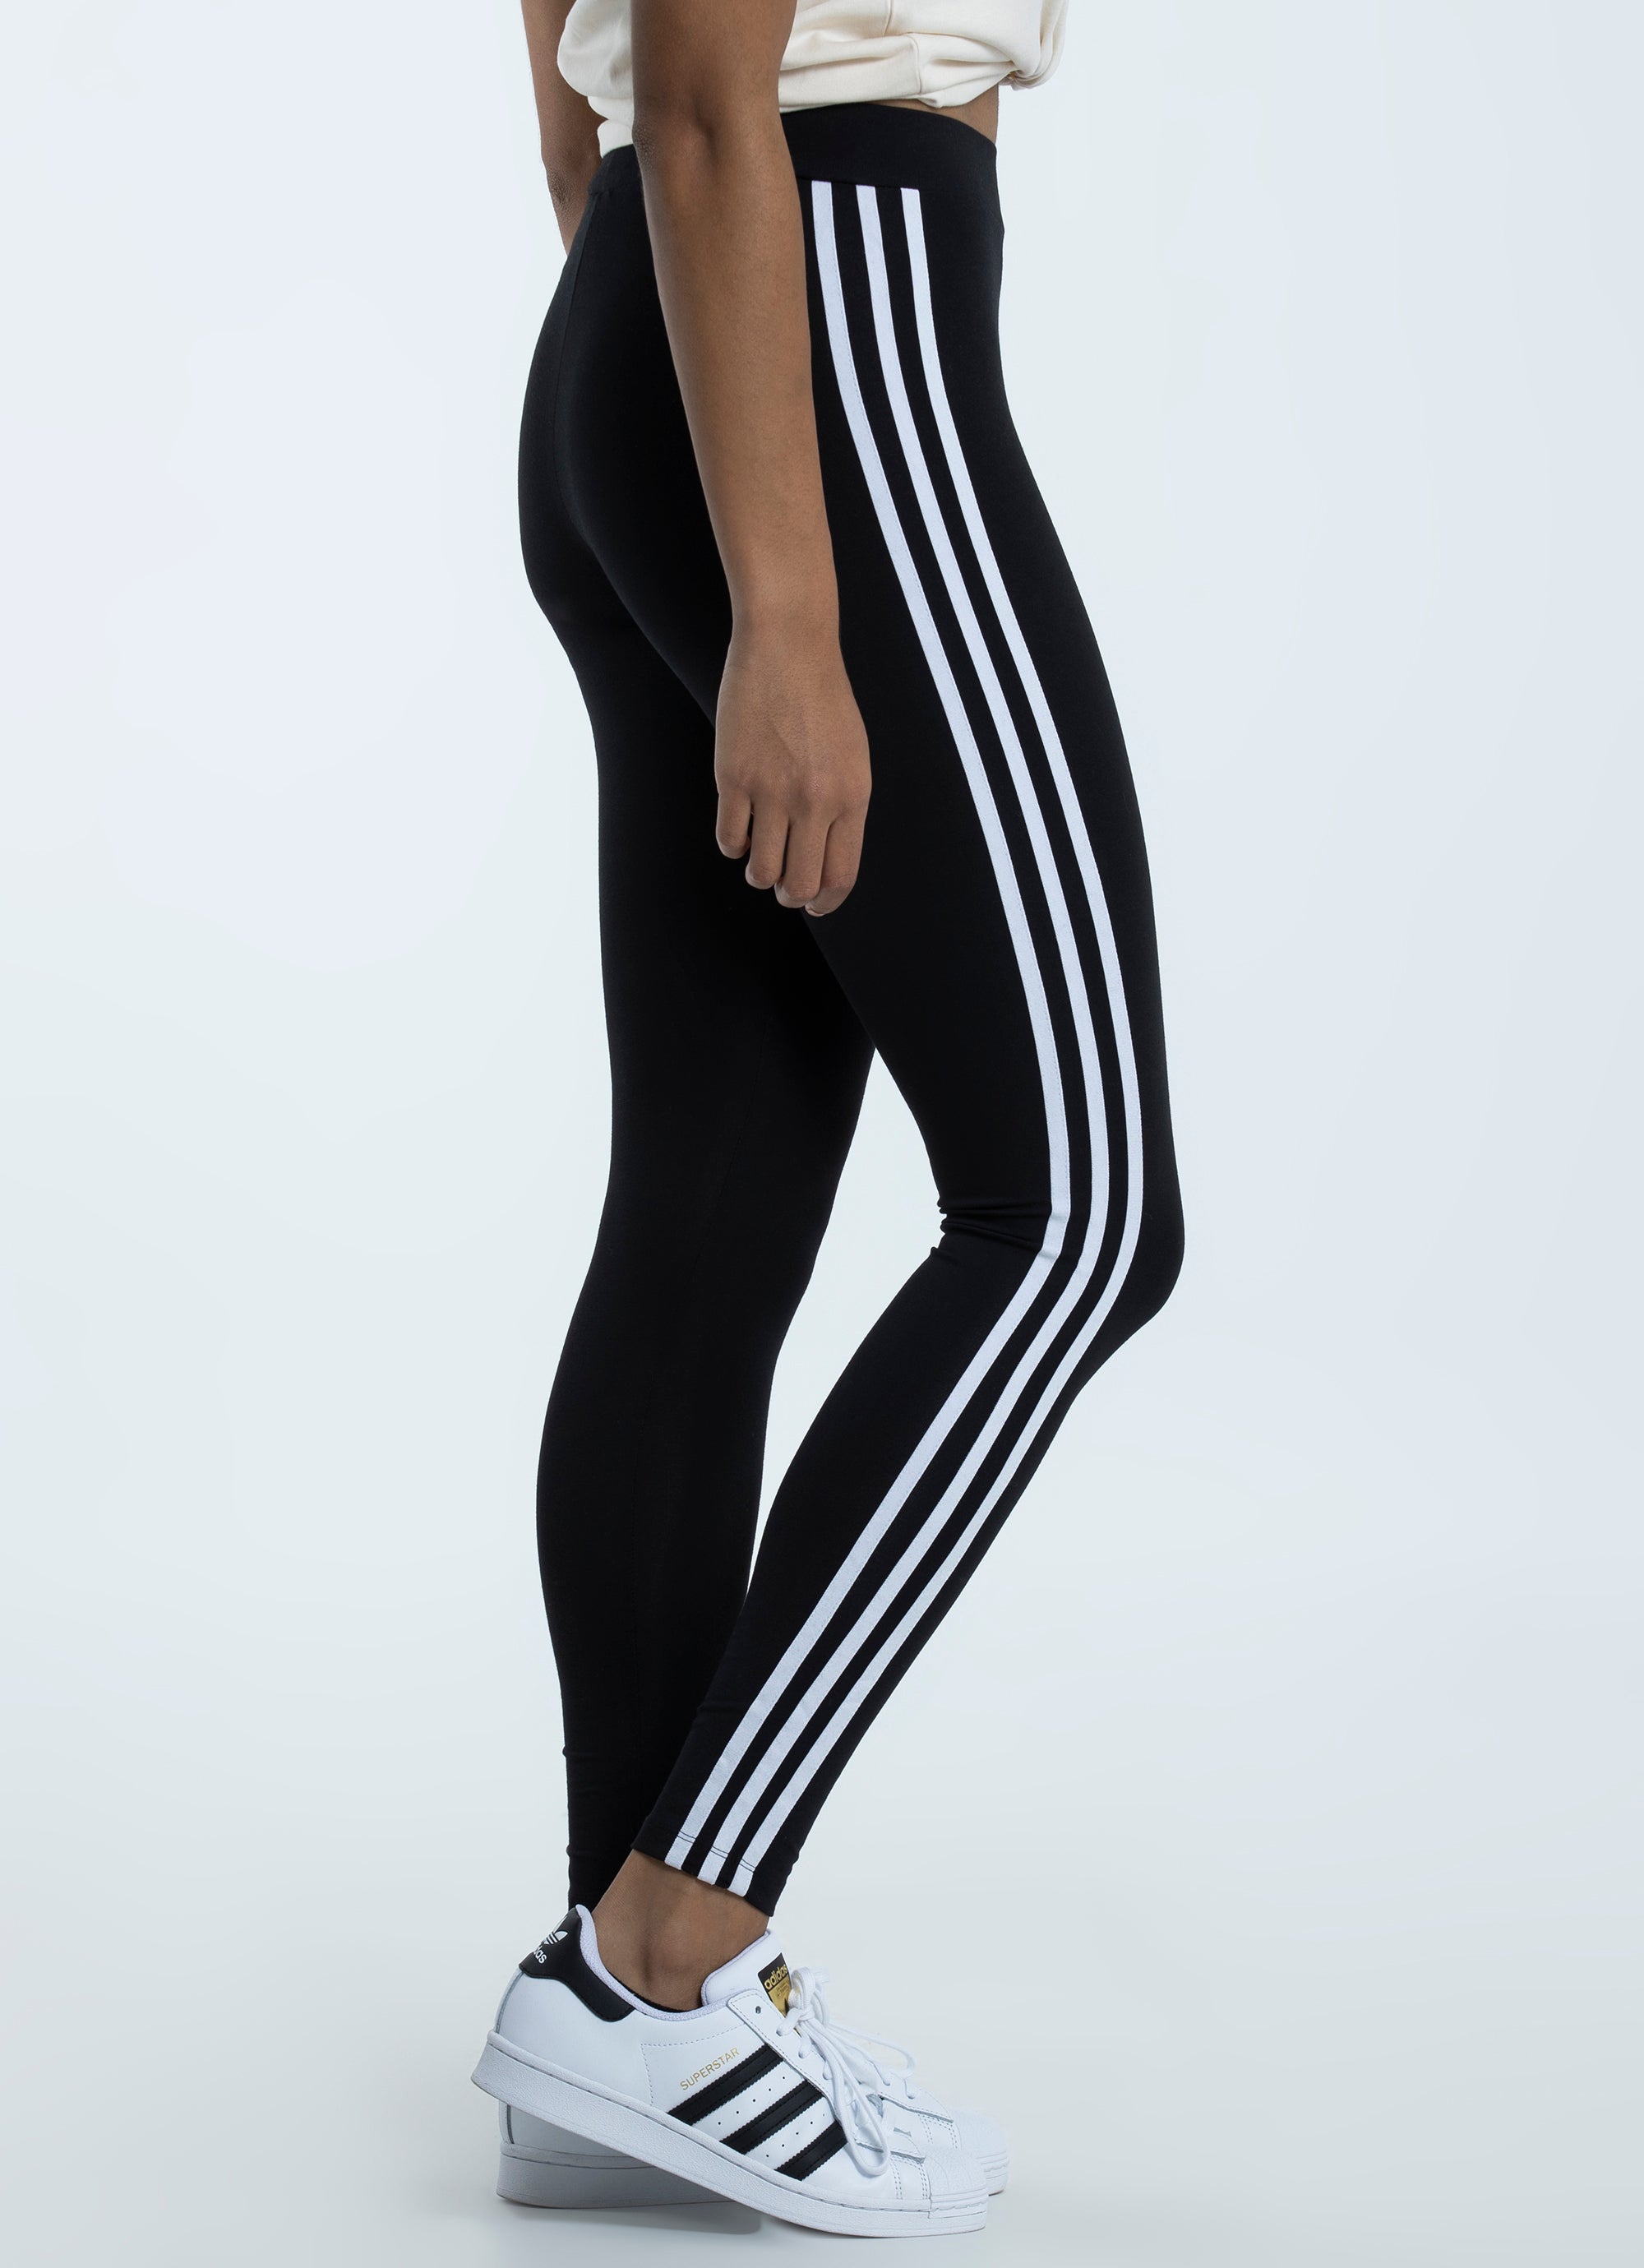 Adidas 3 Stripes Womens Black Leggings Gym Yoga Running Pants size 8 to 14  | eBay